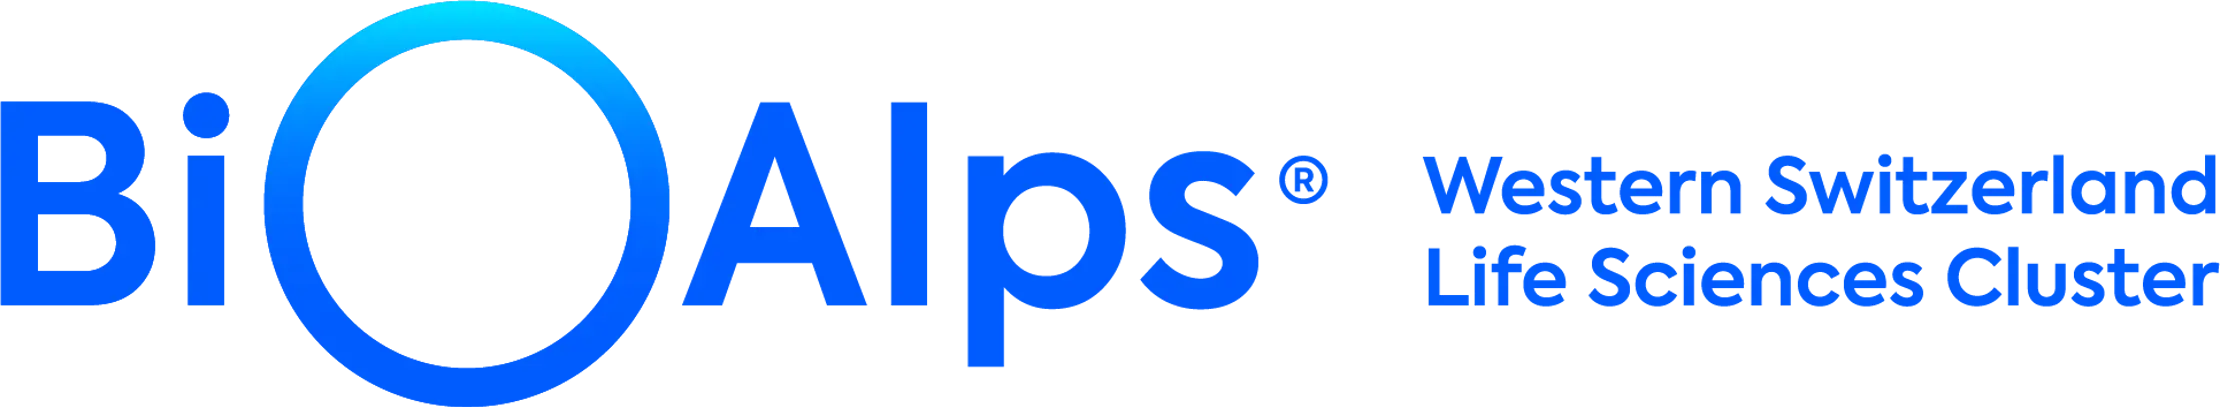 Bioalps Logo Tagline Beschnitten